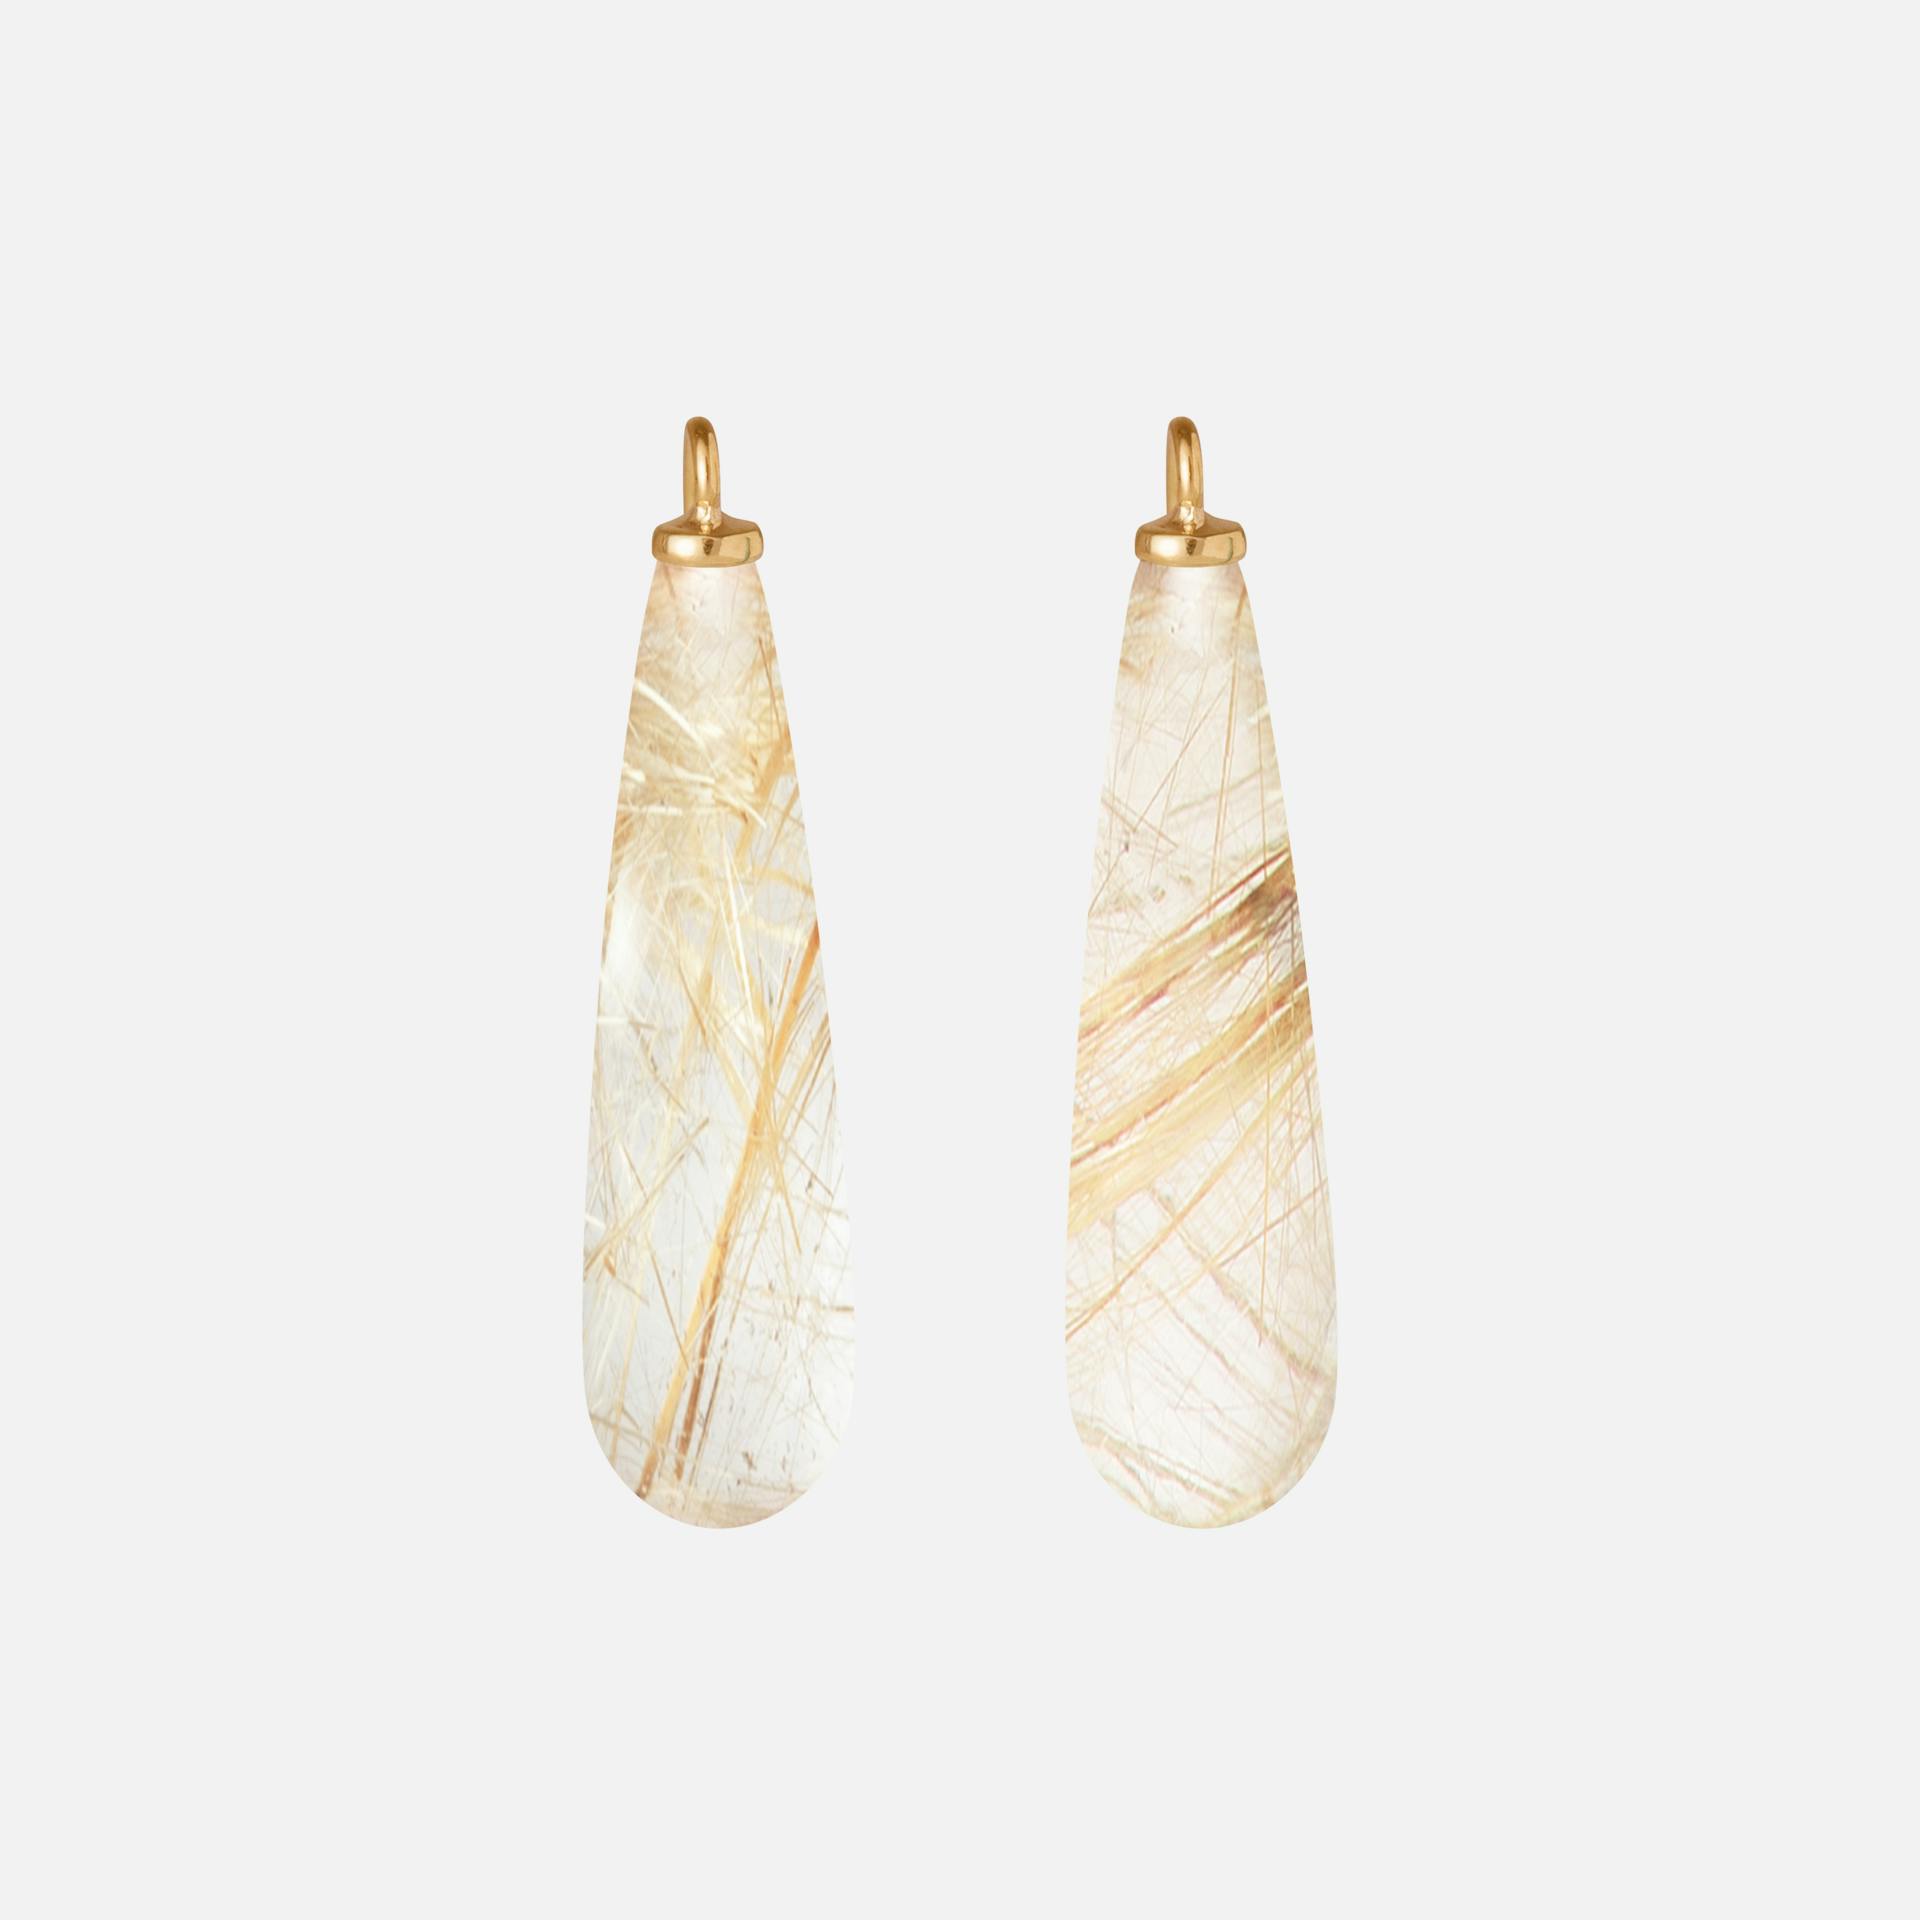 Earring pendant drop 18k gold with rutile quartz